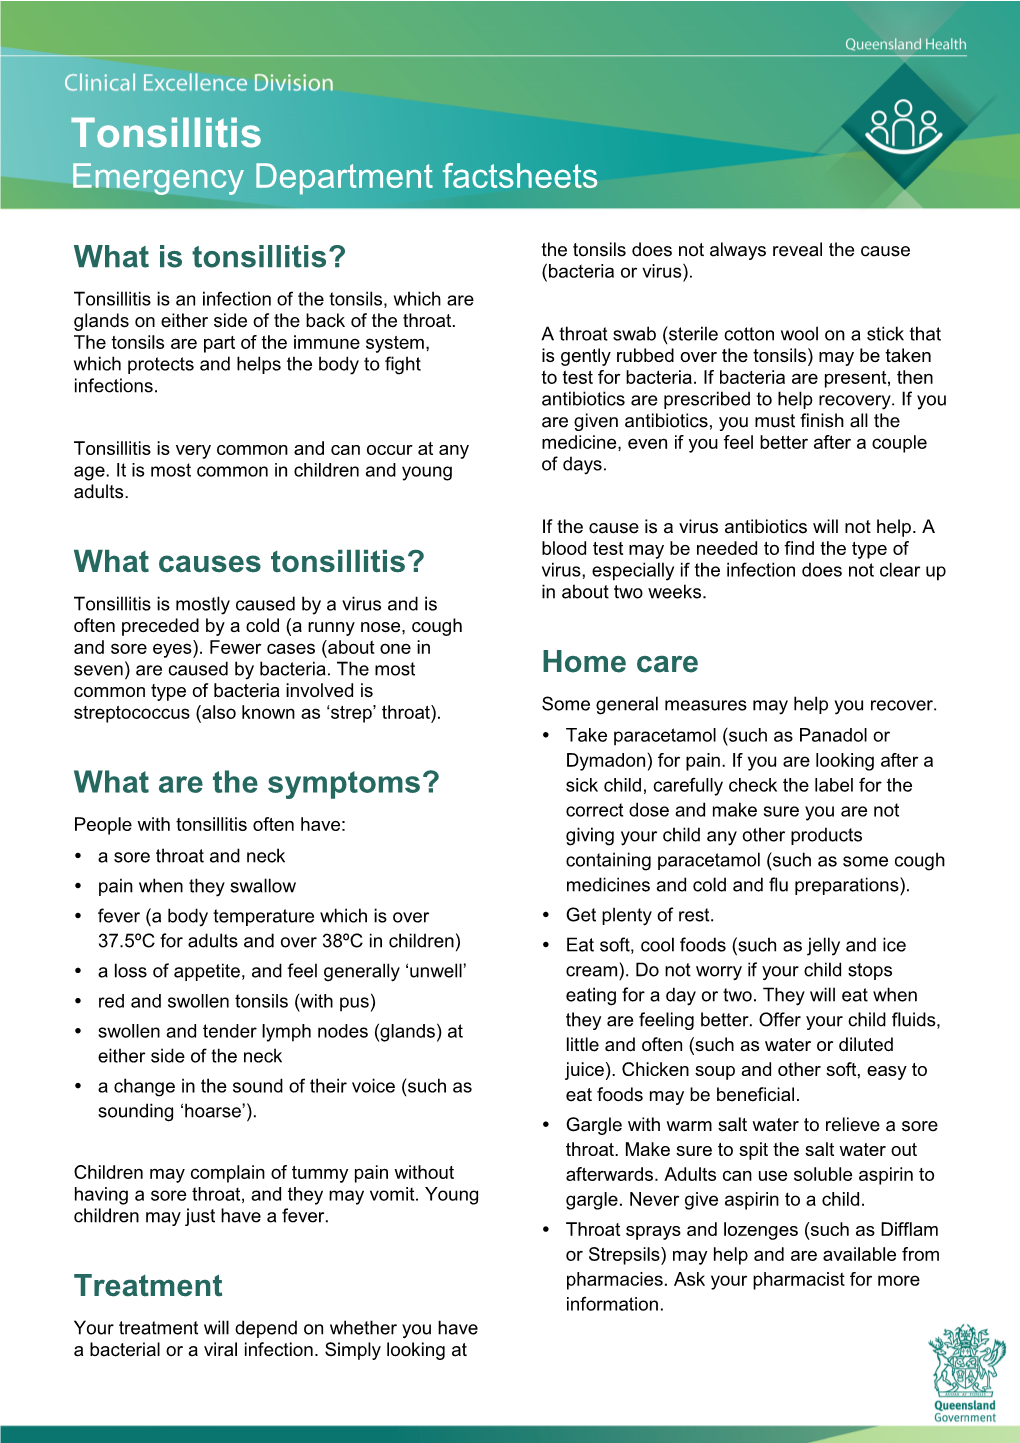 Tonsillitis | Emergency Department Patient Information Sheet